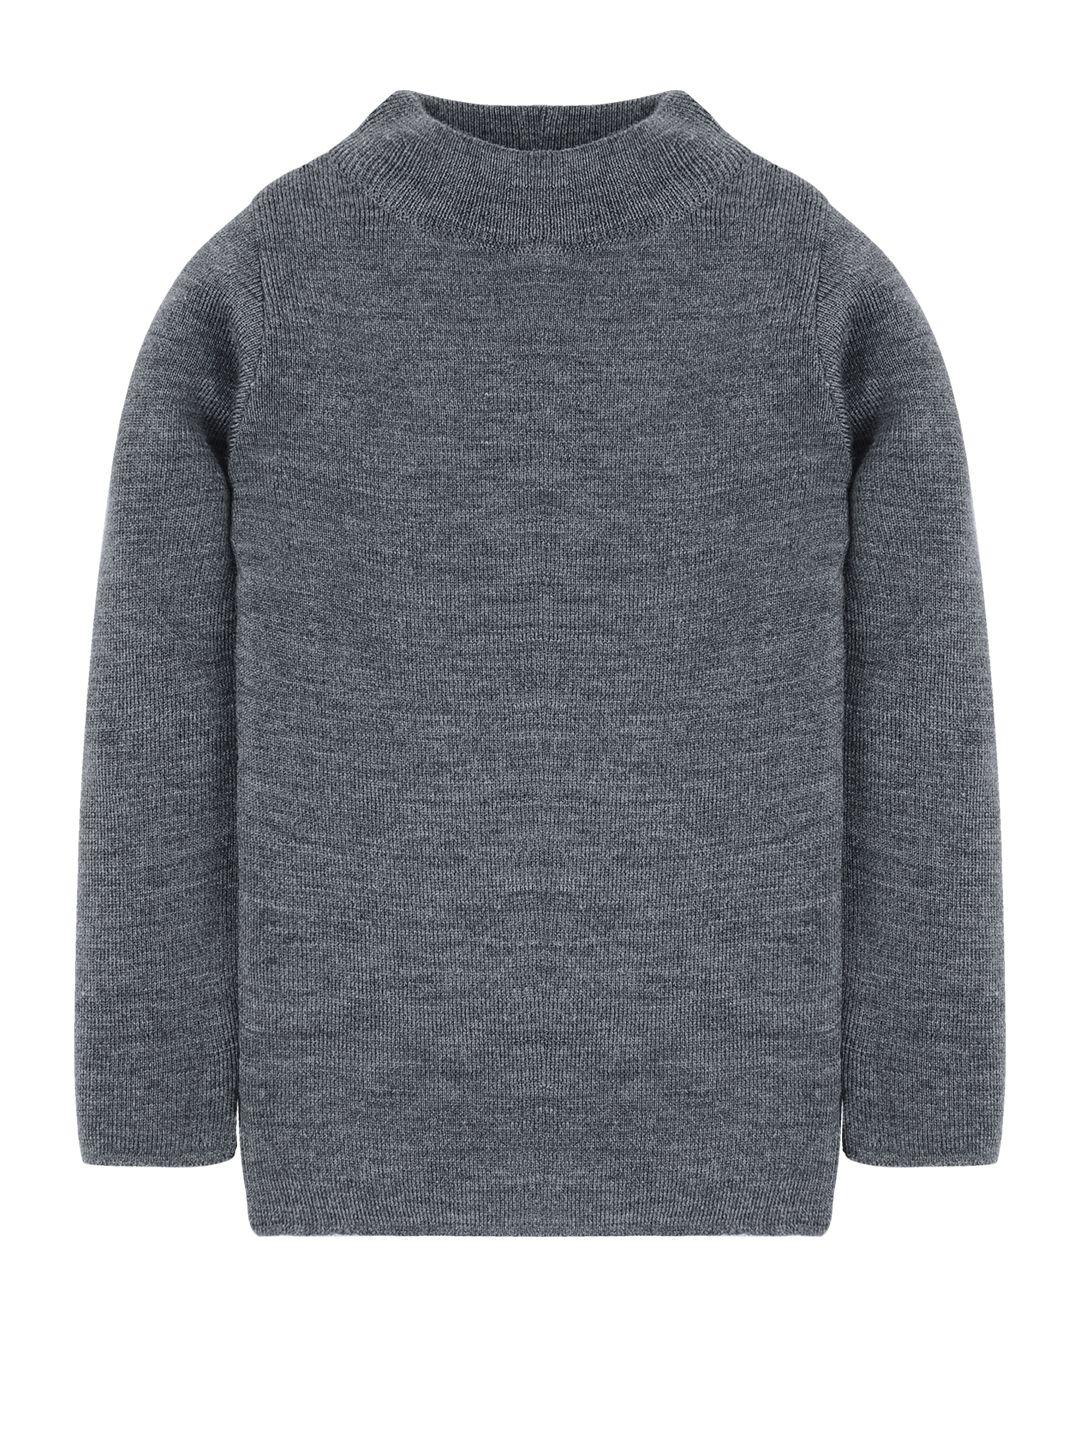 rvk unisex grey solid acrylic sweater